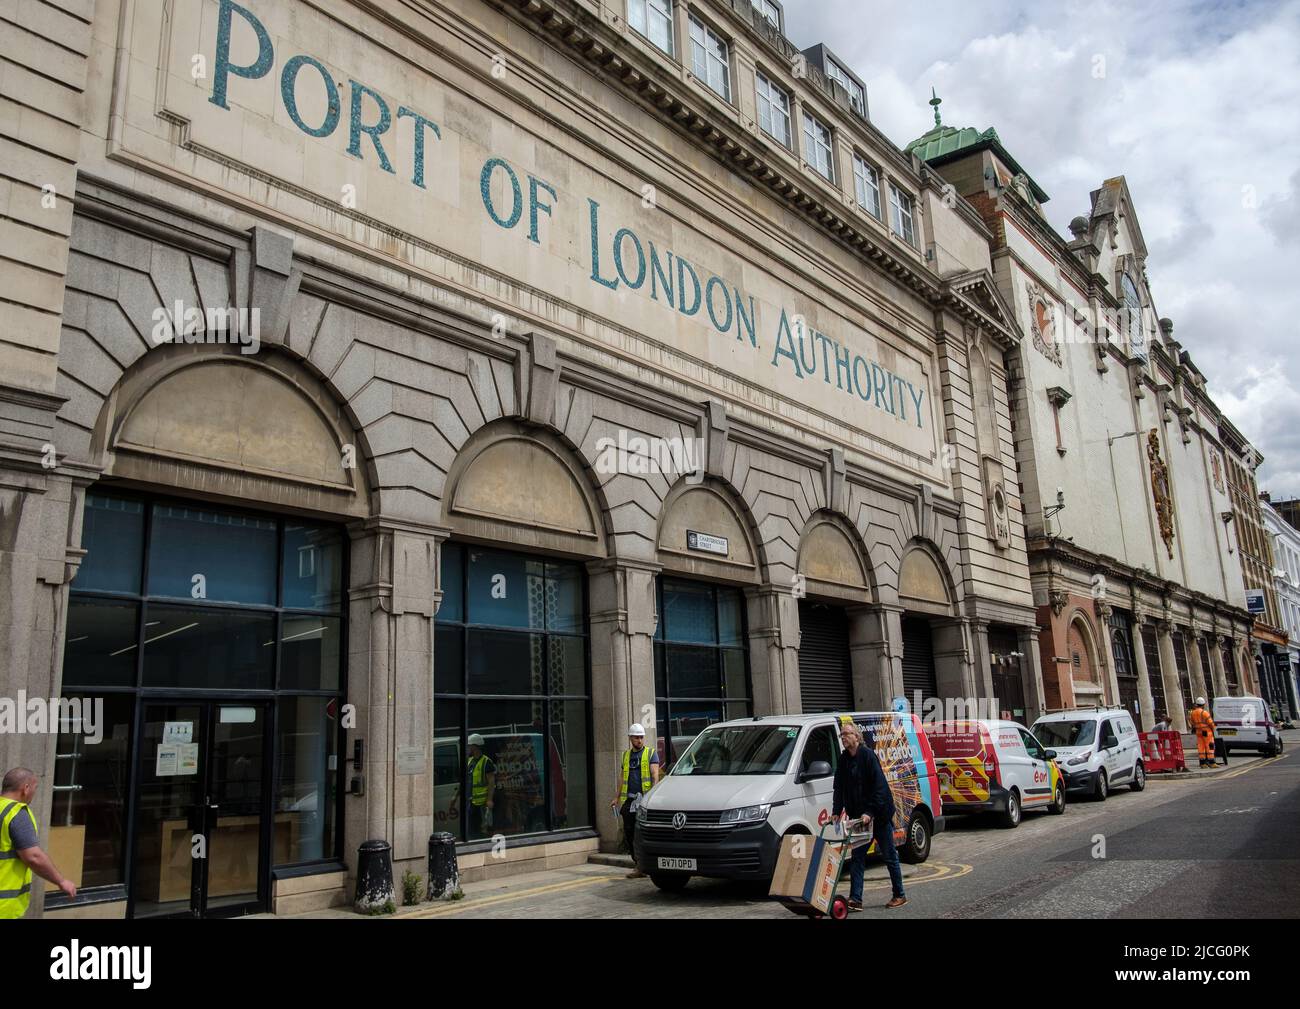 Port of London Authority building, Charterhouse Street, Smithfield, London Stock Photo